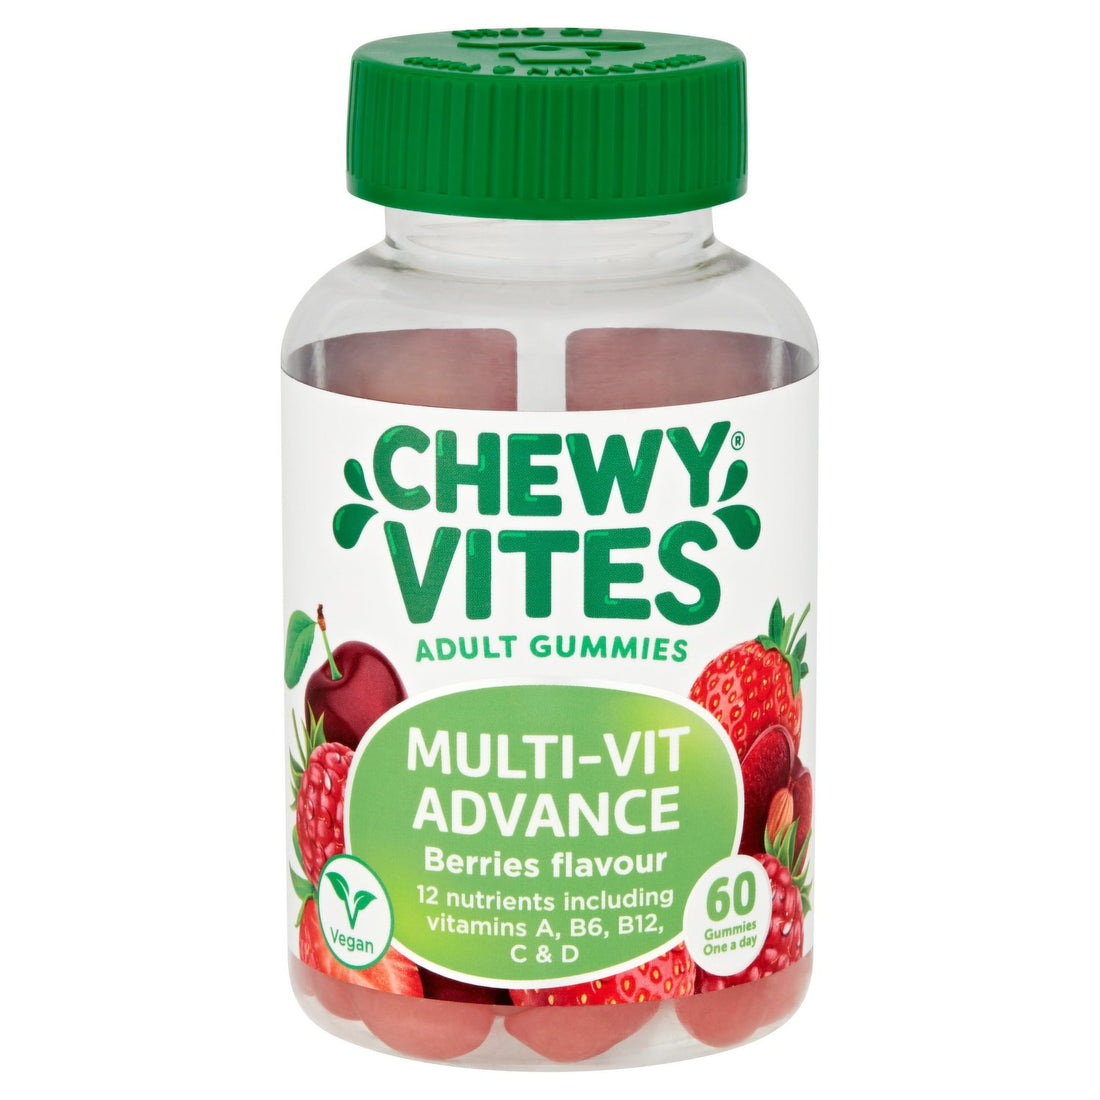 Chewy Vites Multi-Vit Advance Adult Gummies 60s